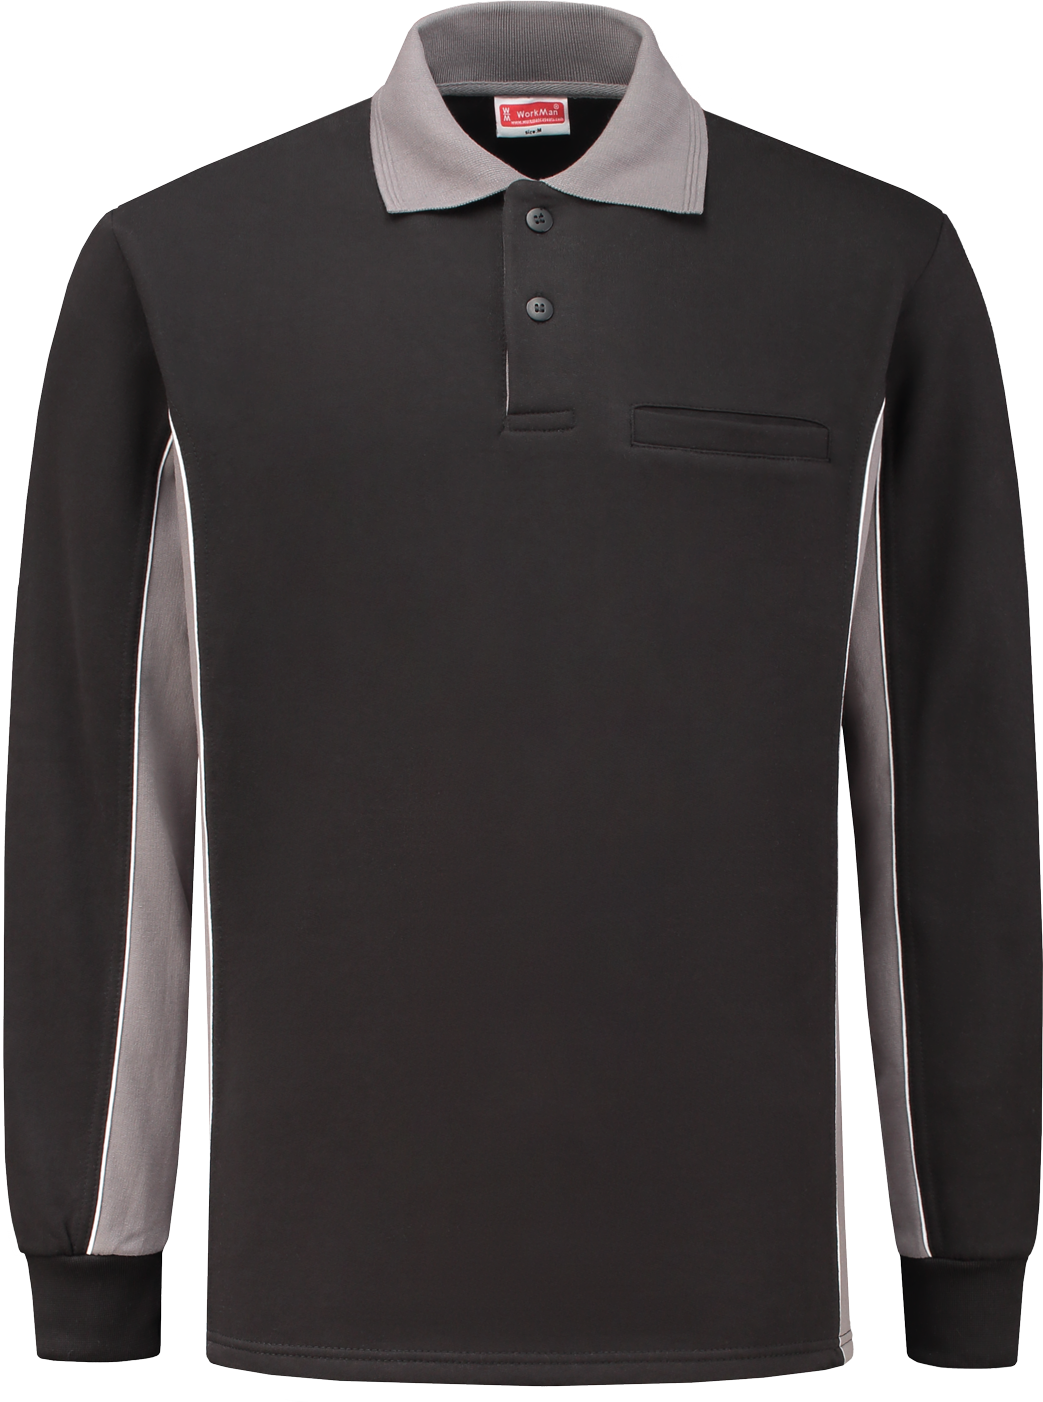 10.6.2406.03 2406 Polosweater Bi-Colour Zwart / Grijs L